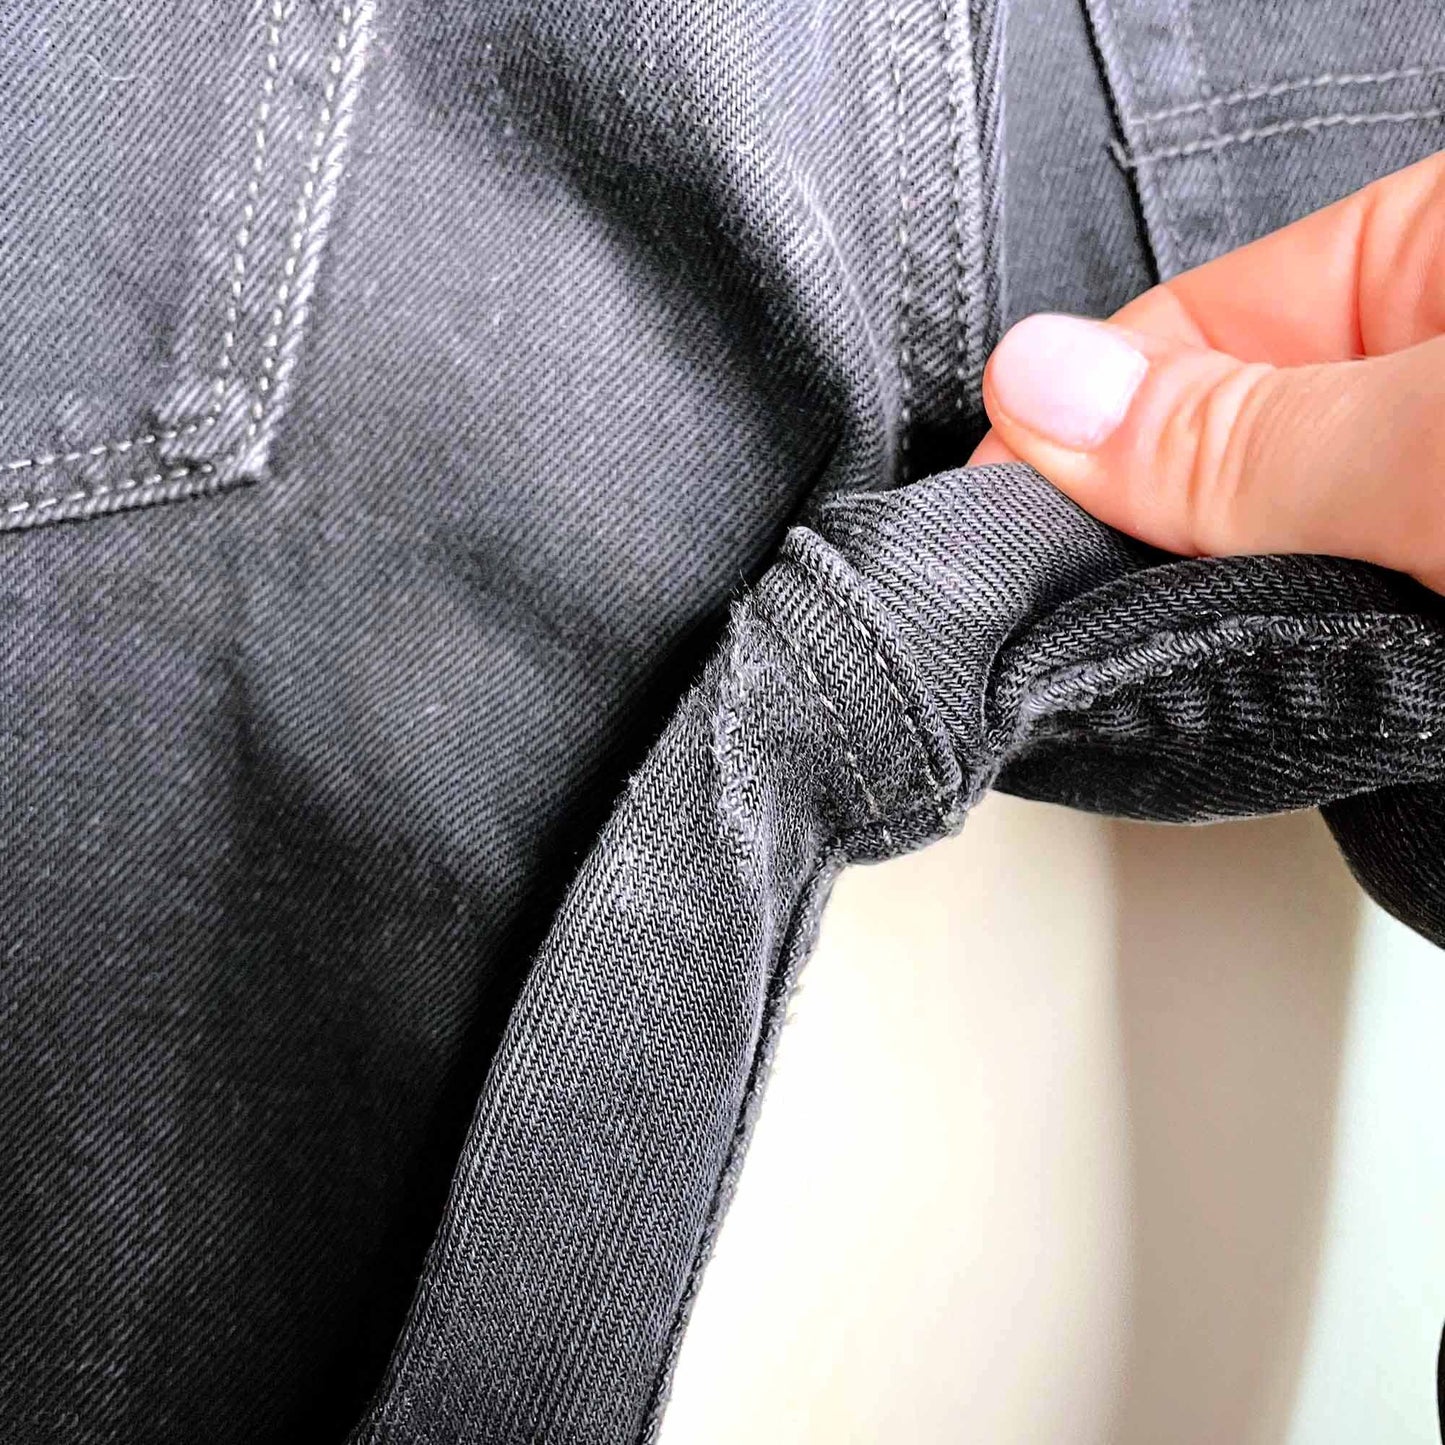 levi's mens black 505 straight regular fit jeans - size 33